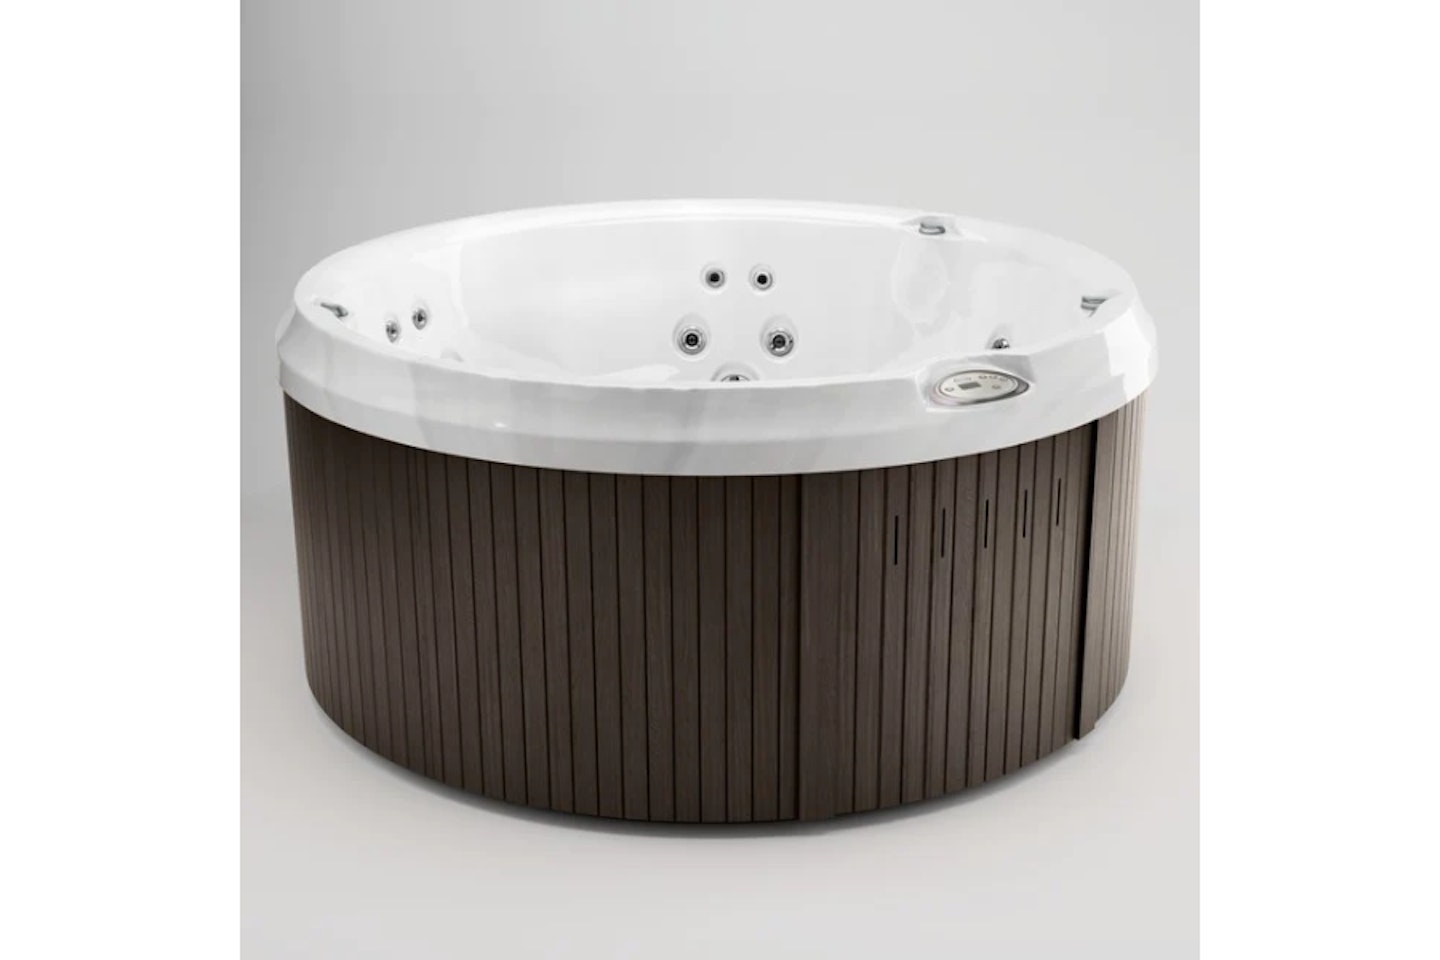 Jacuzzi J210 4 Person Hot tub